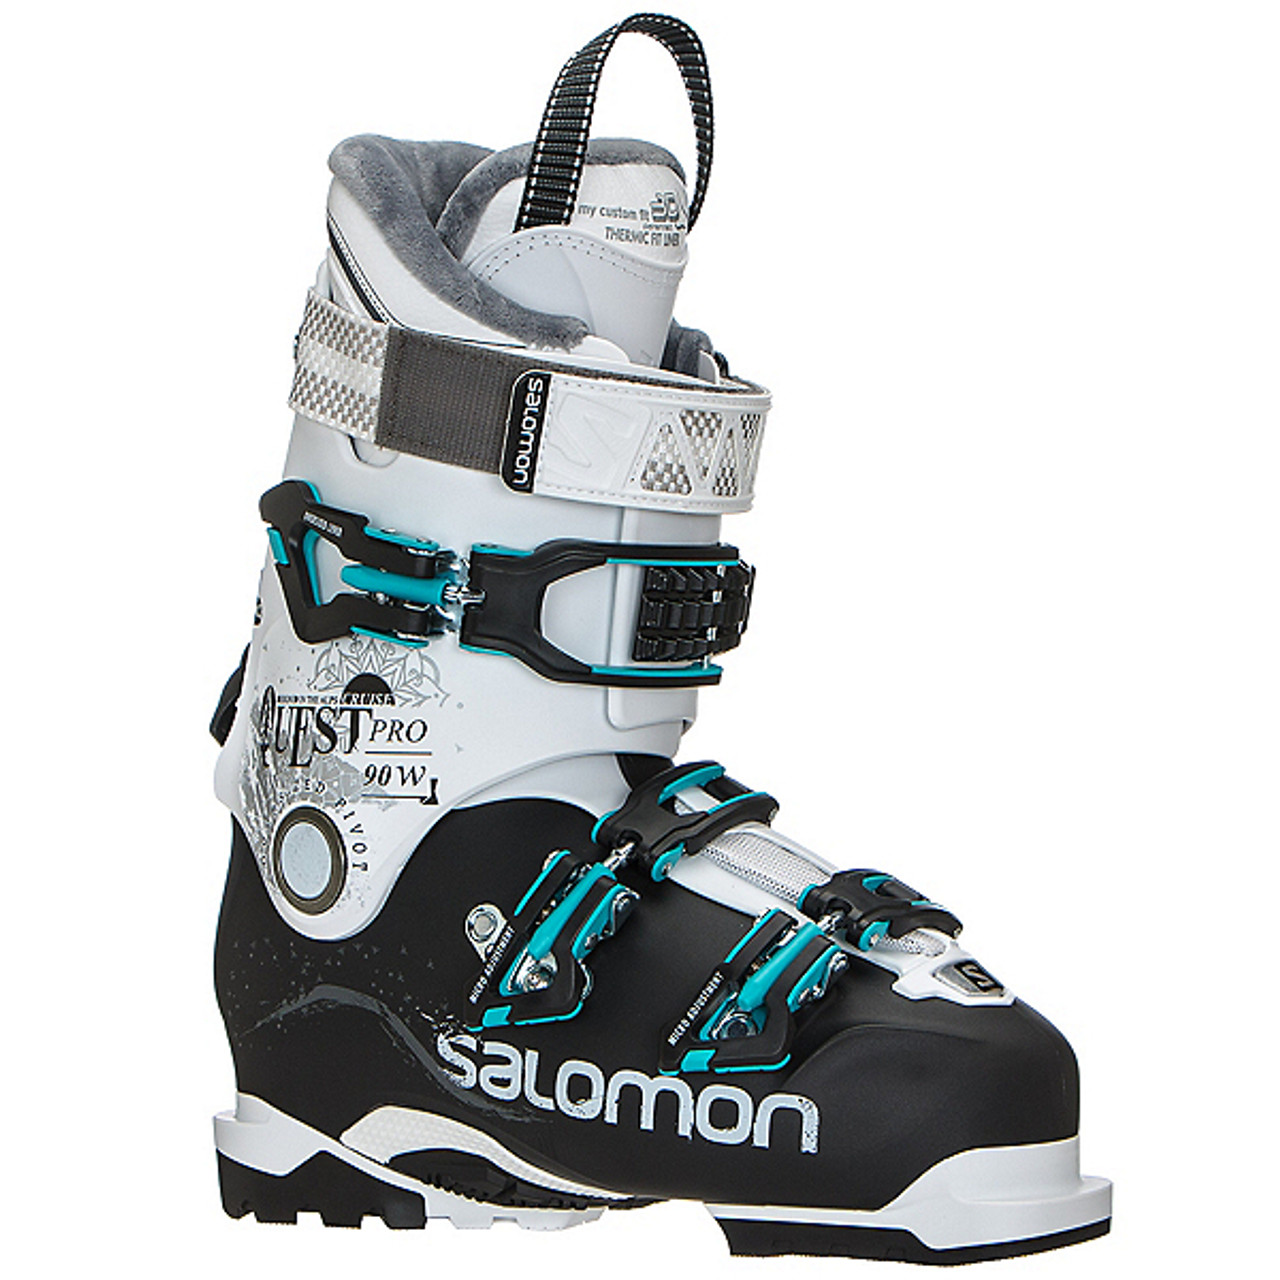 Salomon Quest Pro Cruise | Intermediate Ski Boots Get